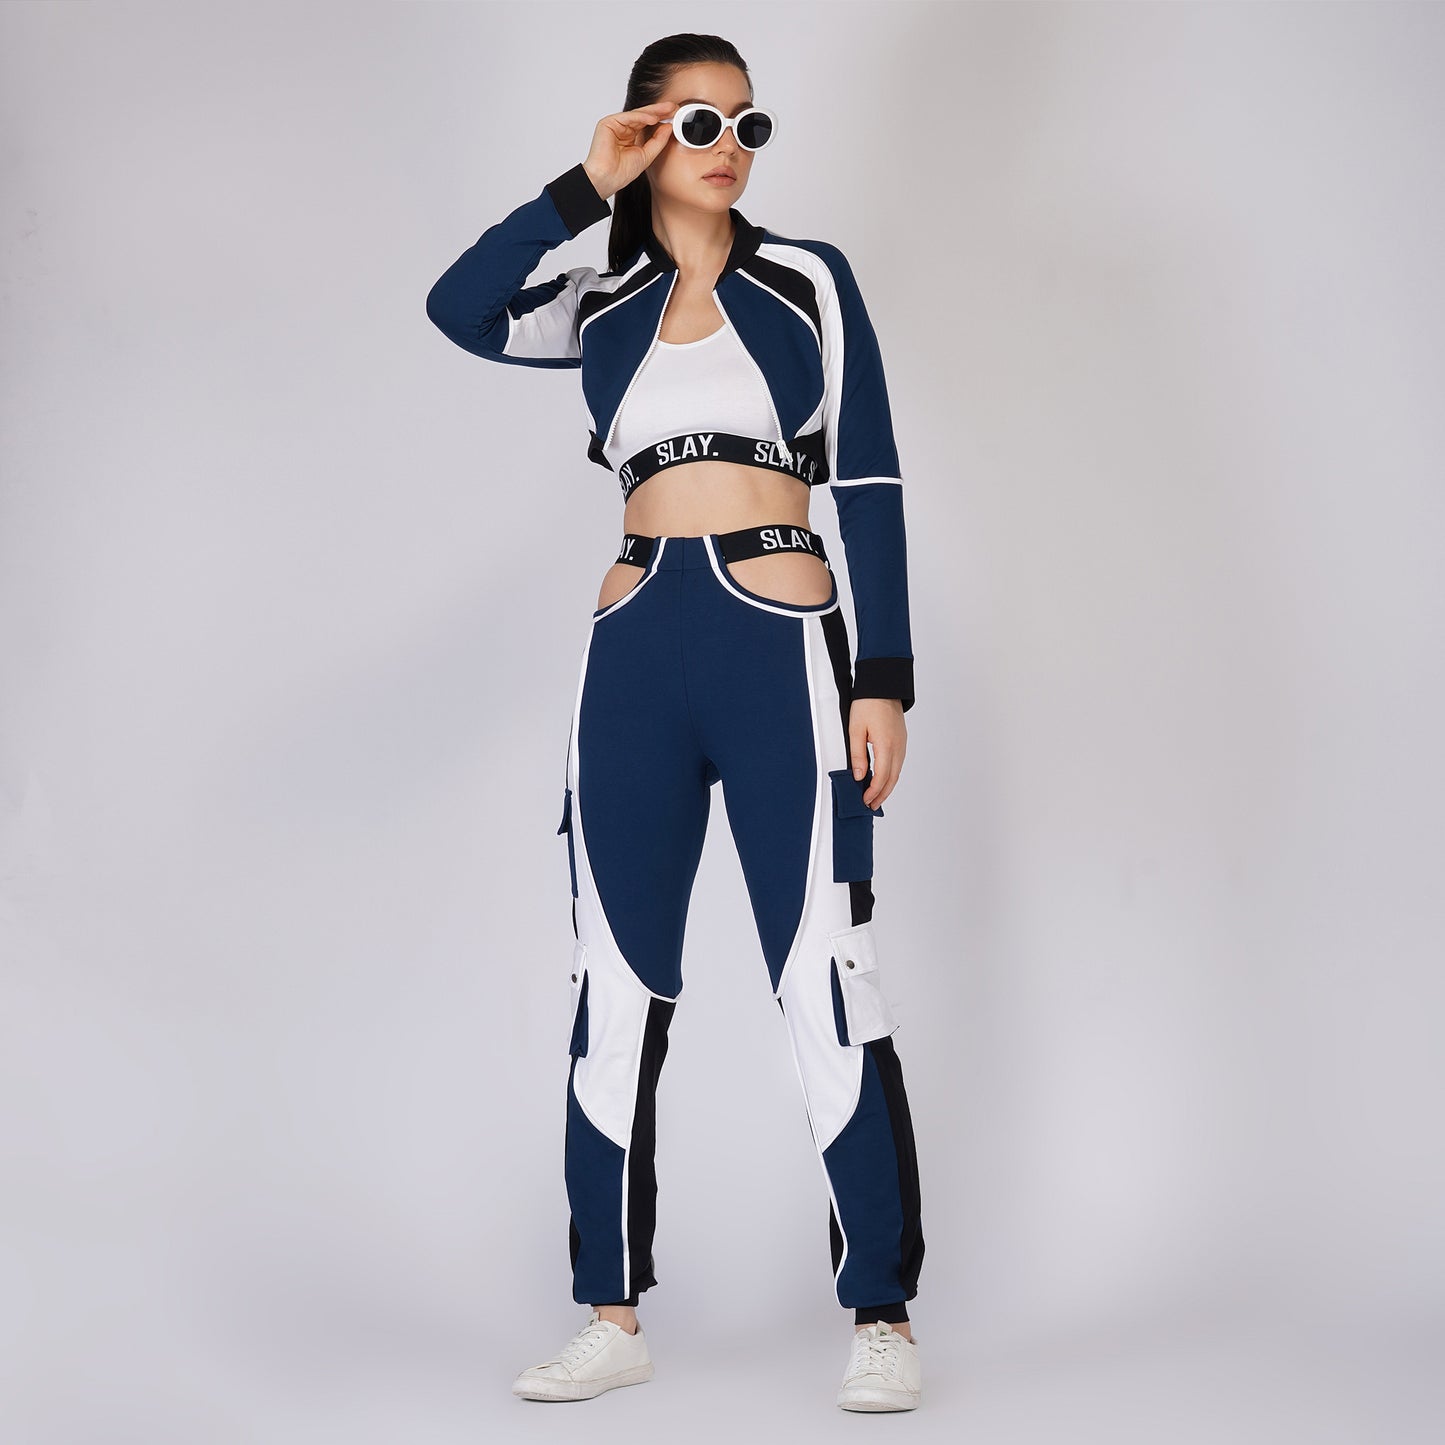 SLAY. Sport Women's Activewear Full Sleeves Crop Top And Pants Co-ord Set  Grey